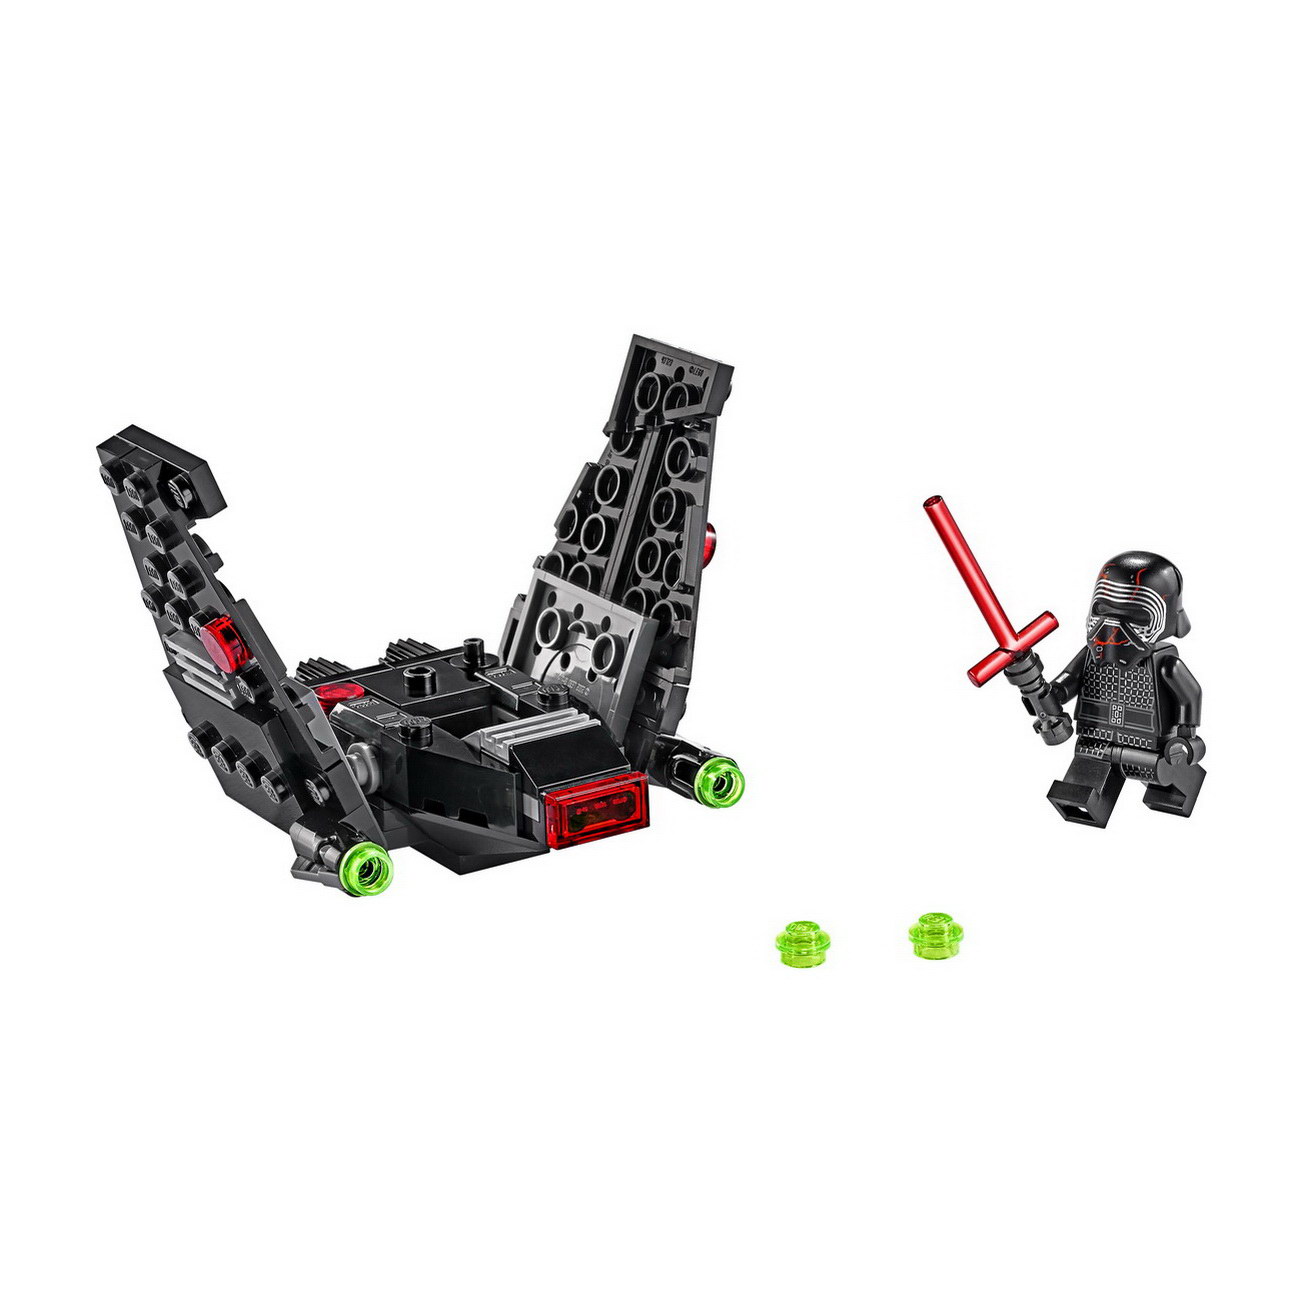 LEGO Star Wars - Kylo Rens Shuttle Microfighter (75264)